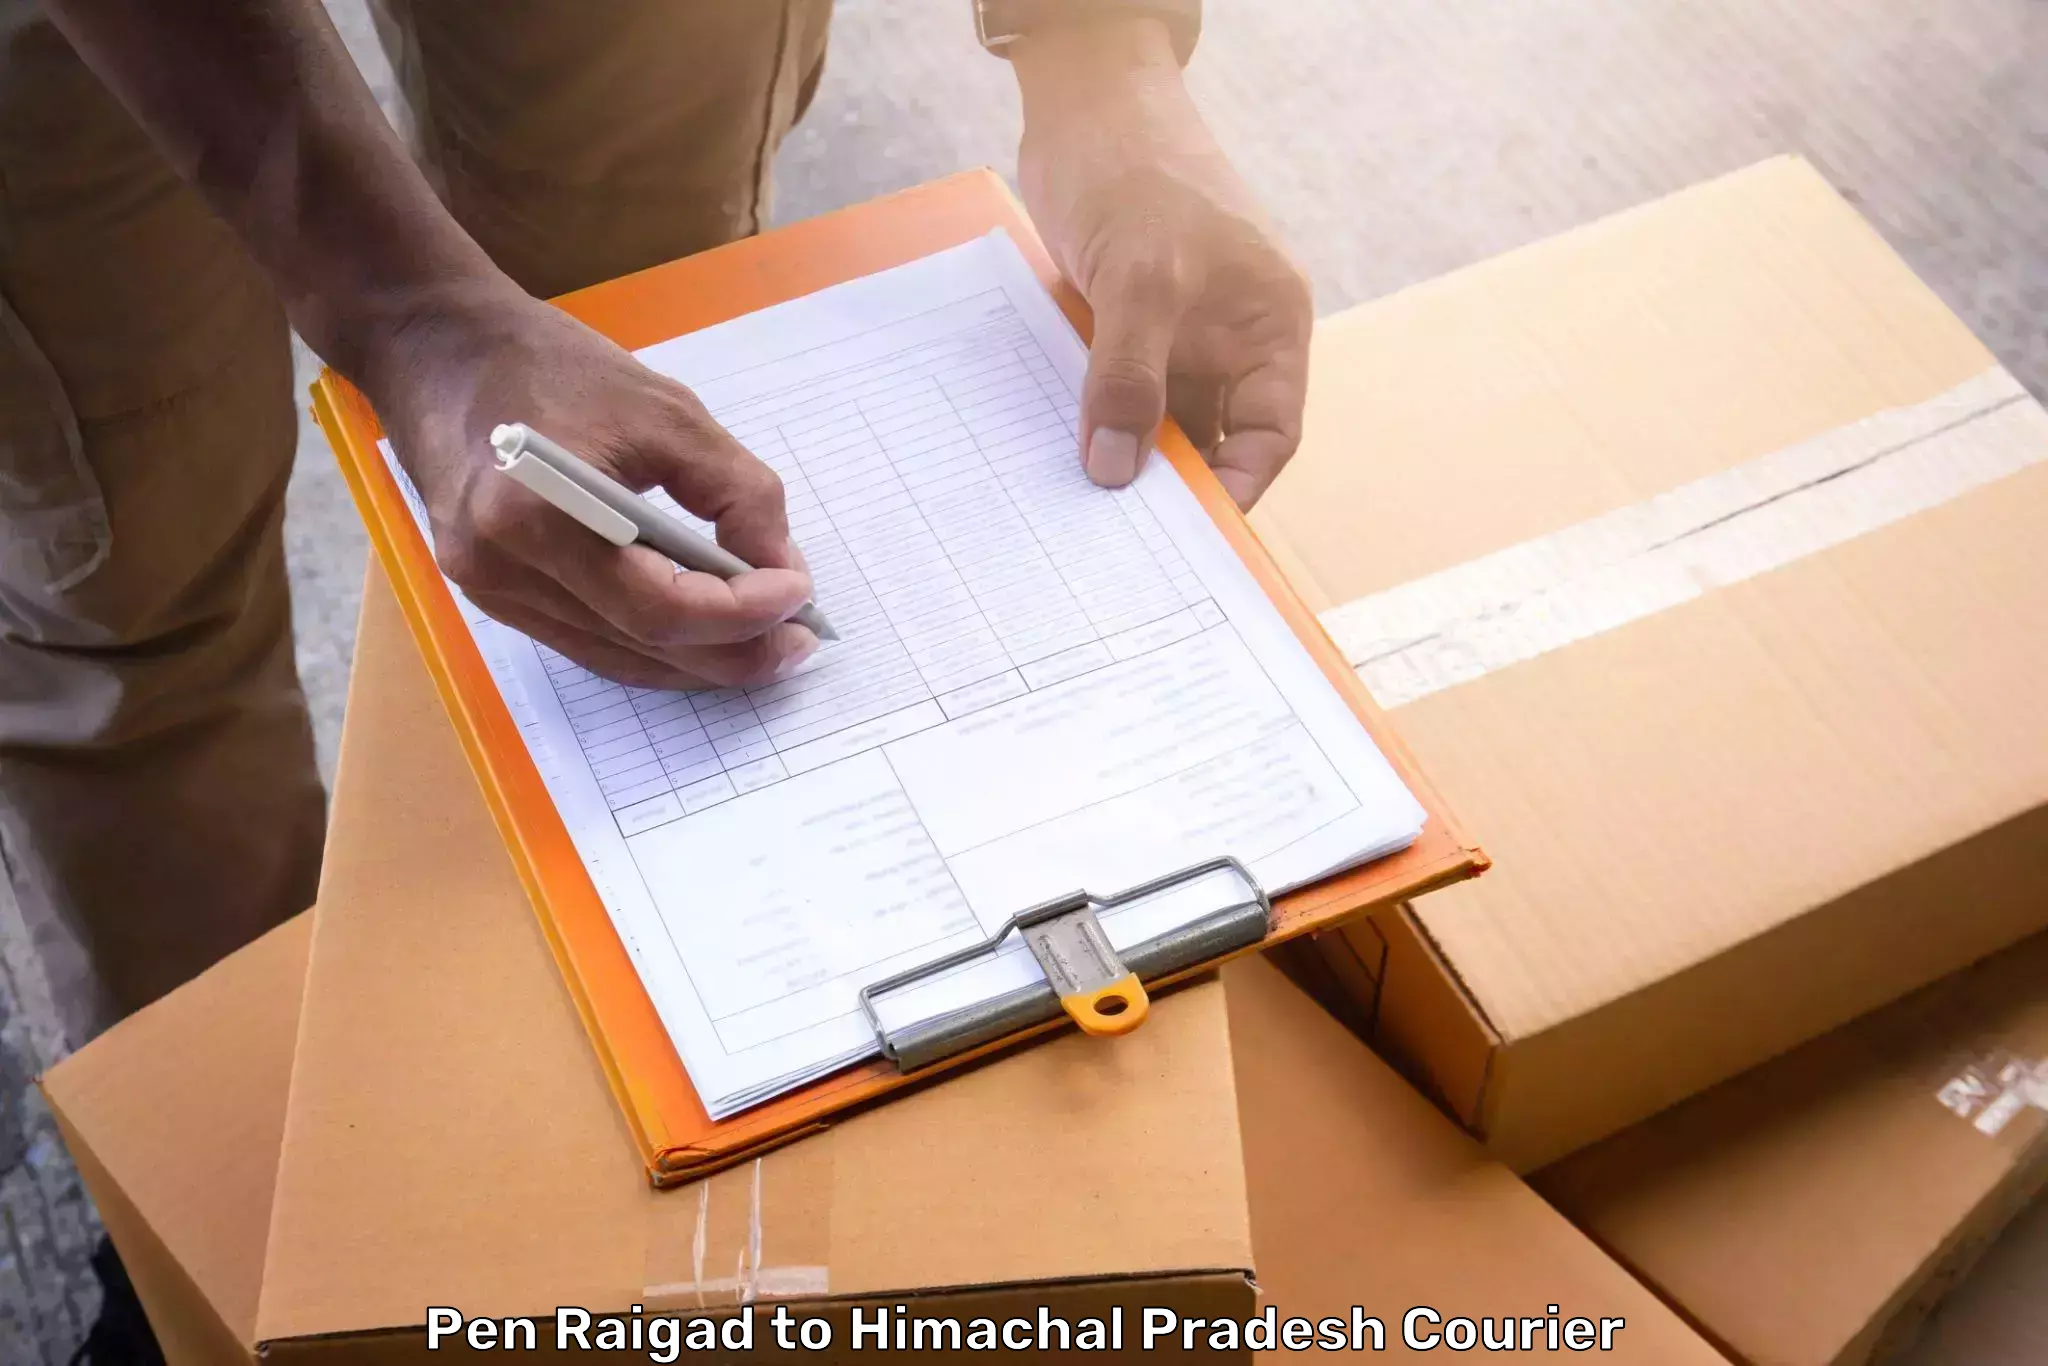 Door-to-door baggage service Pen Raigad to Una Himachal Pradesh